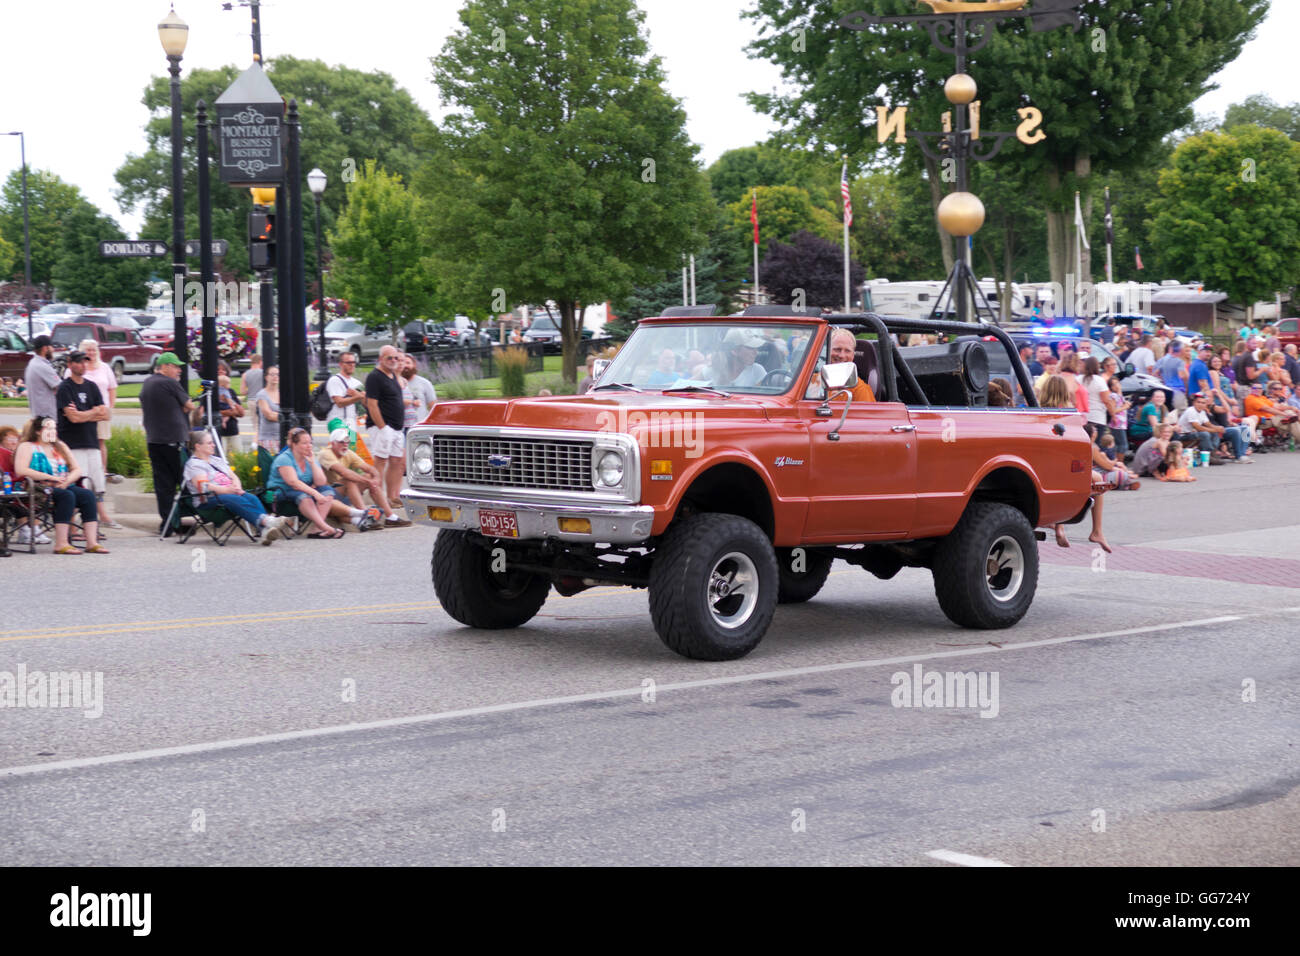 A 1971 Chevrolet Blazer rolls in the 2016 Annual Cruz In Parade through downtown Montague, Michigan. Stock Photo